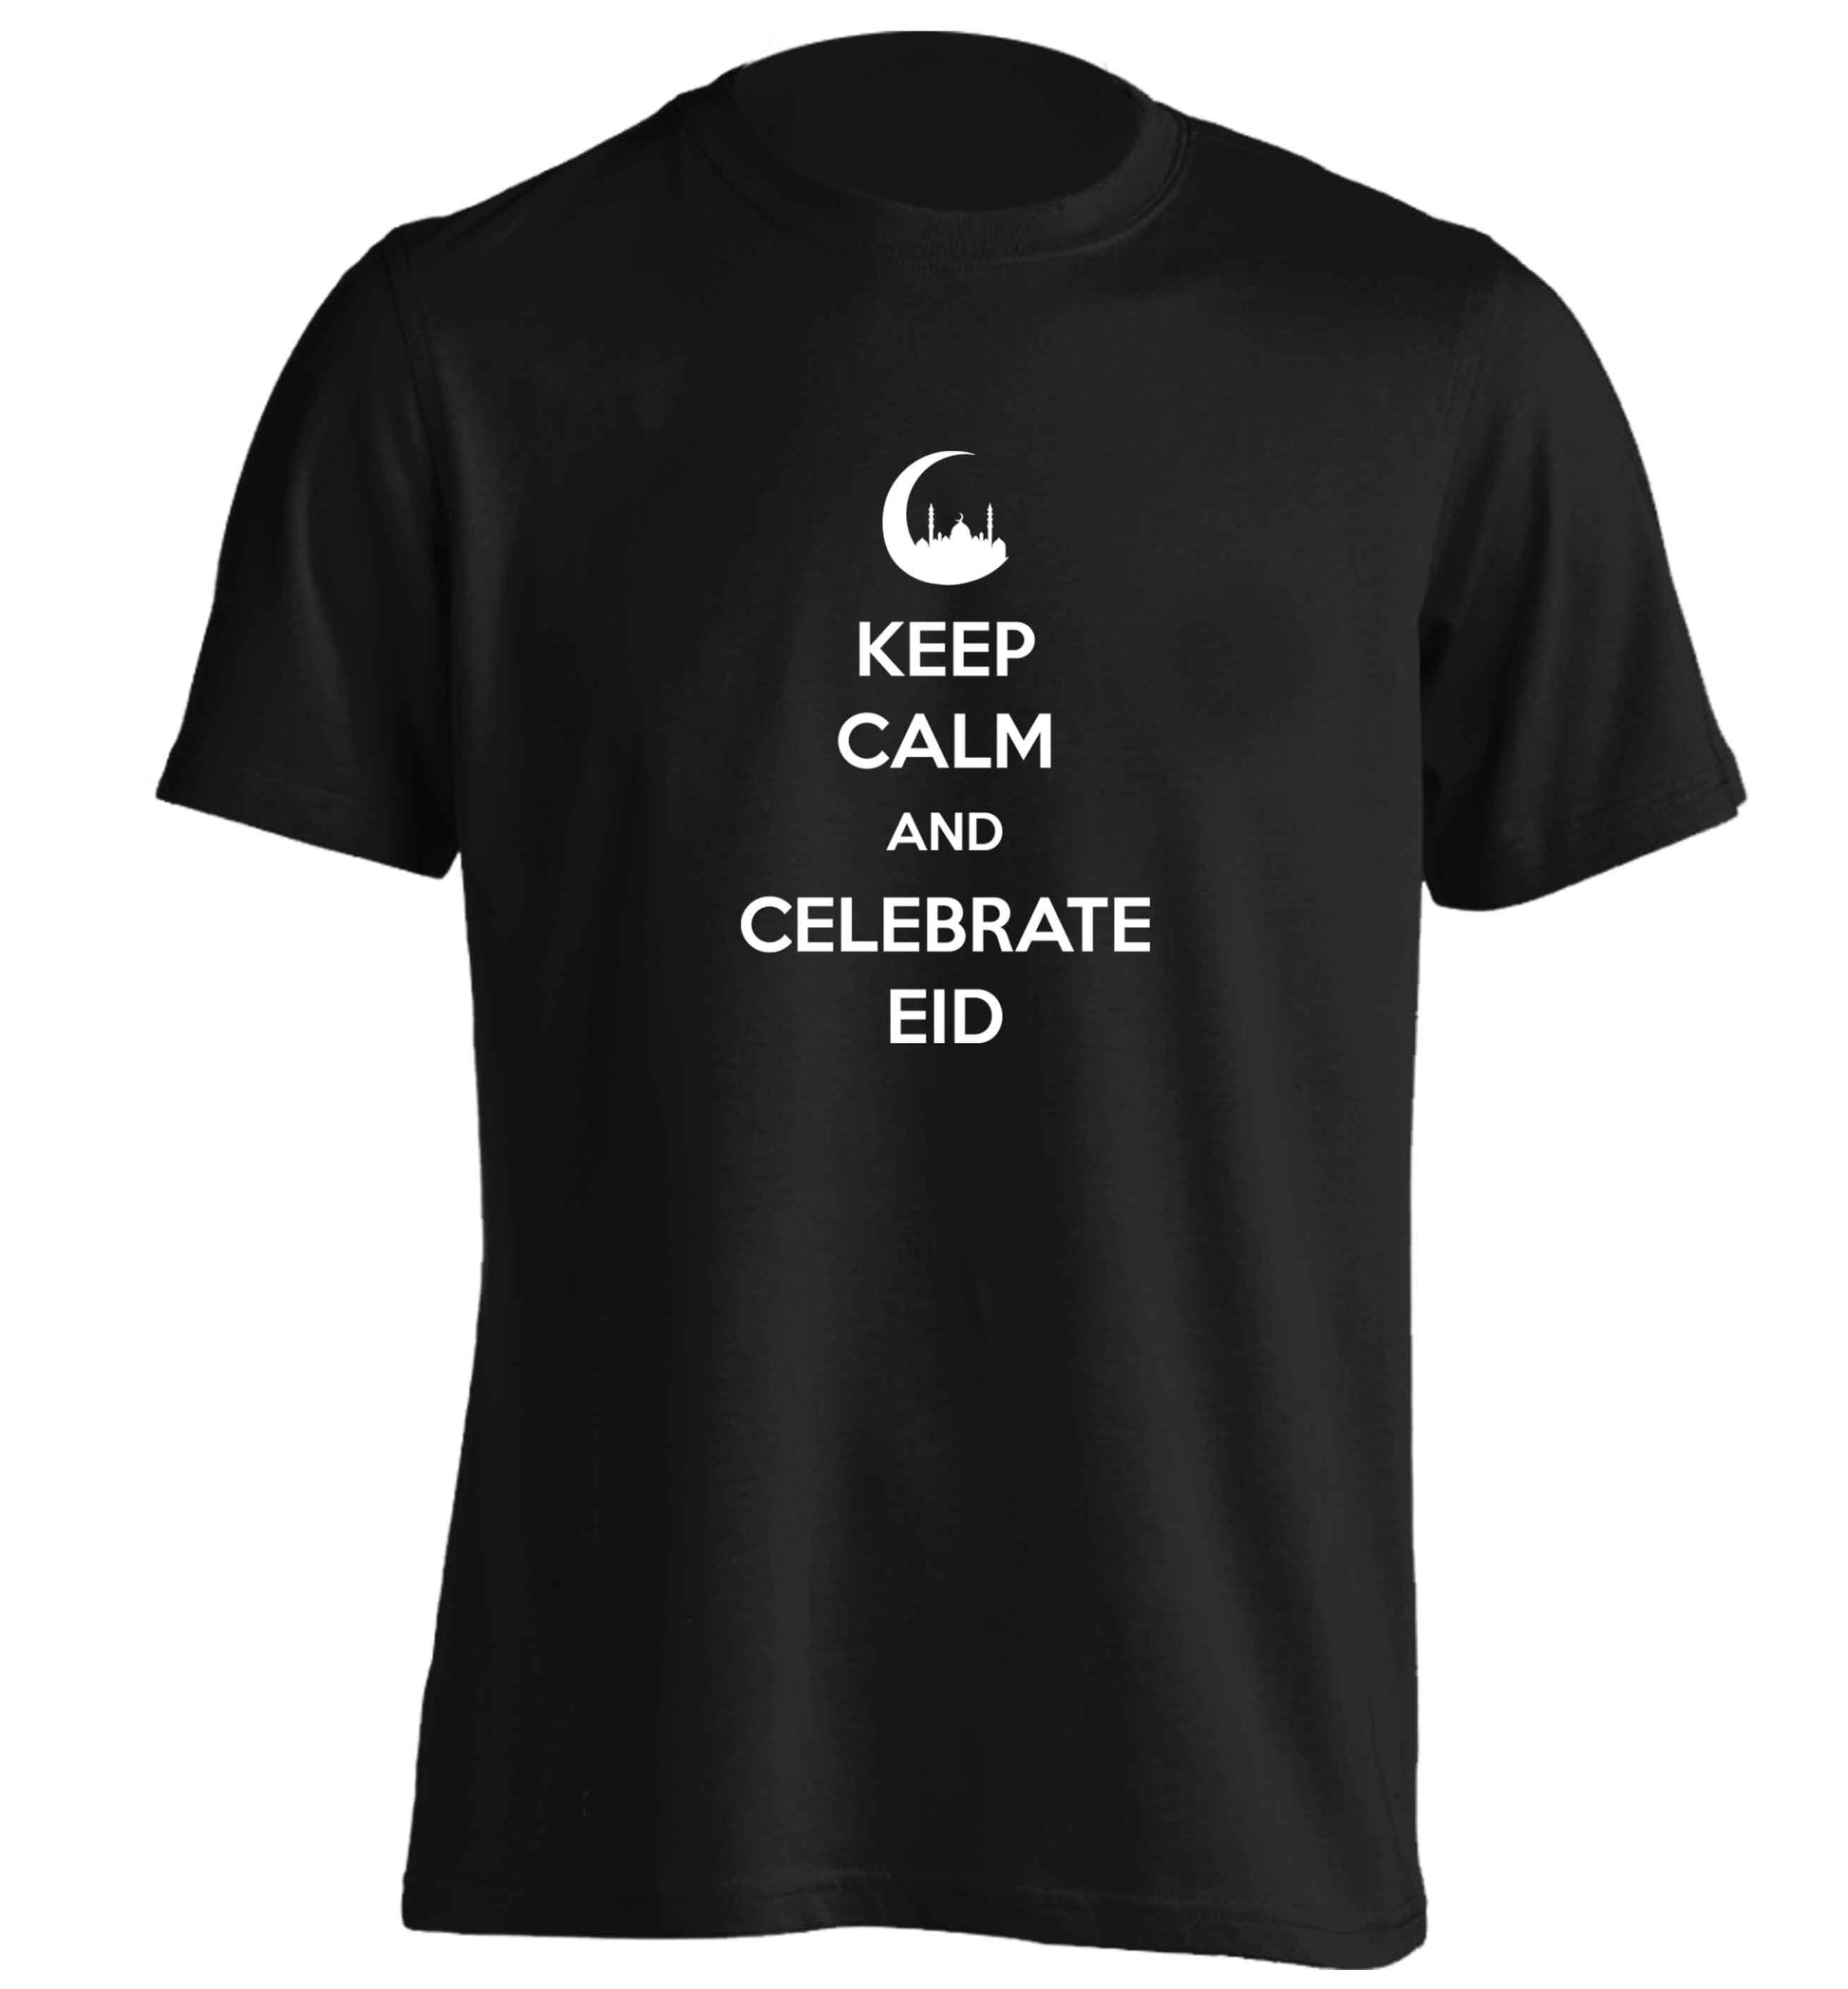 Keep calm and celebrate Eid adults unisex black Tshirt 2XL